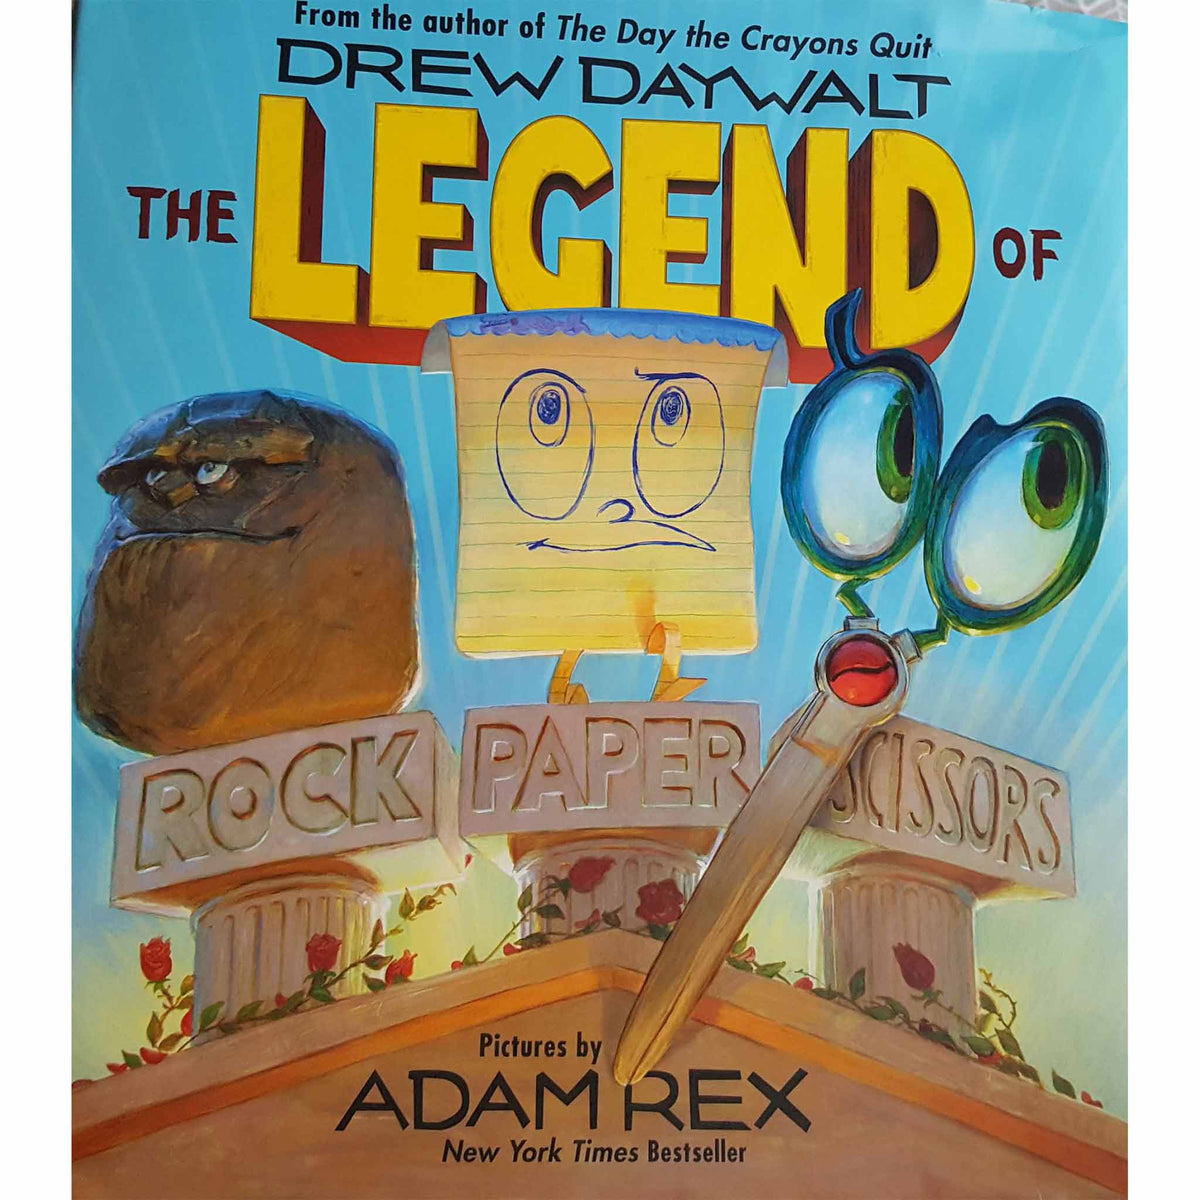 Book Title: The Legend of Rock Paper Scissors